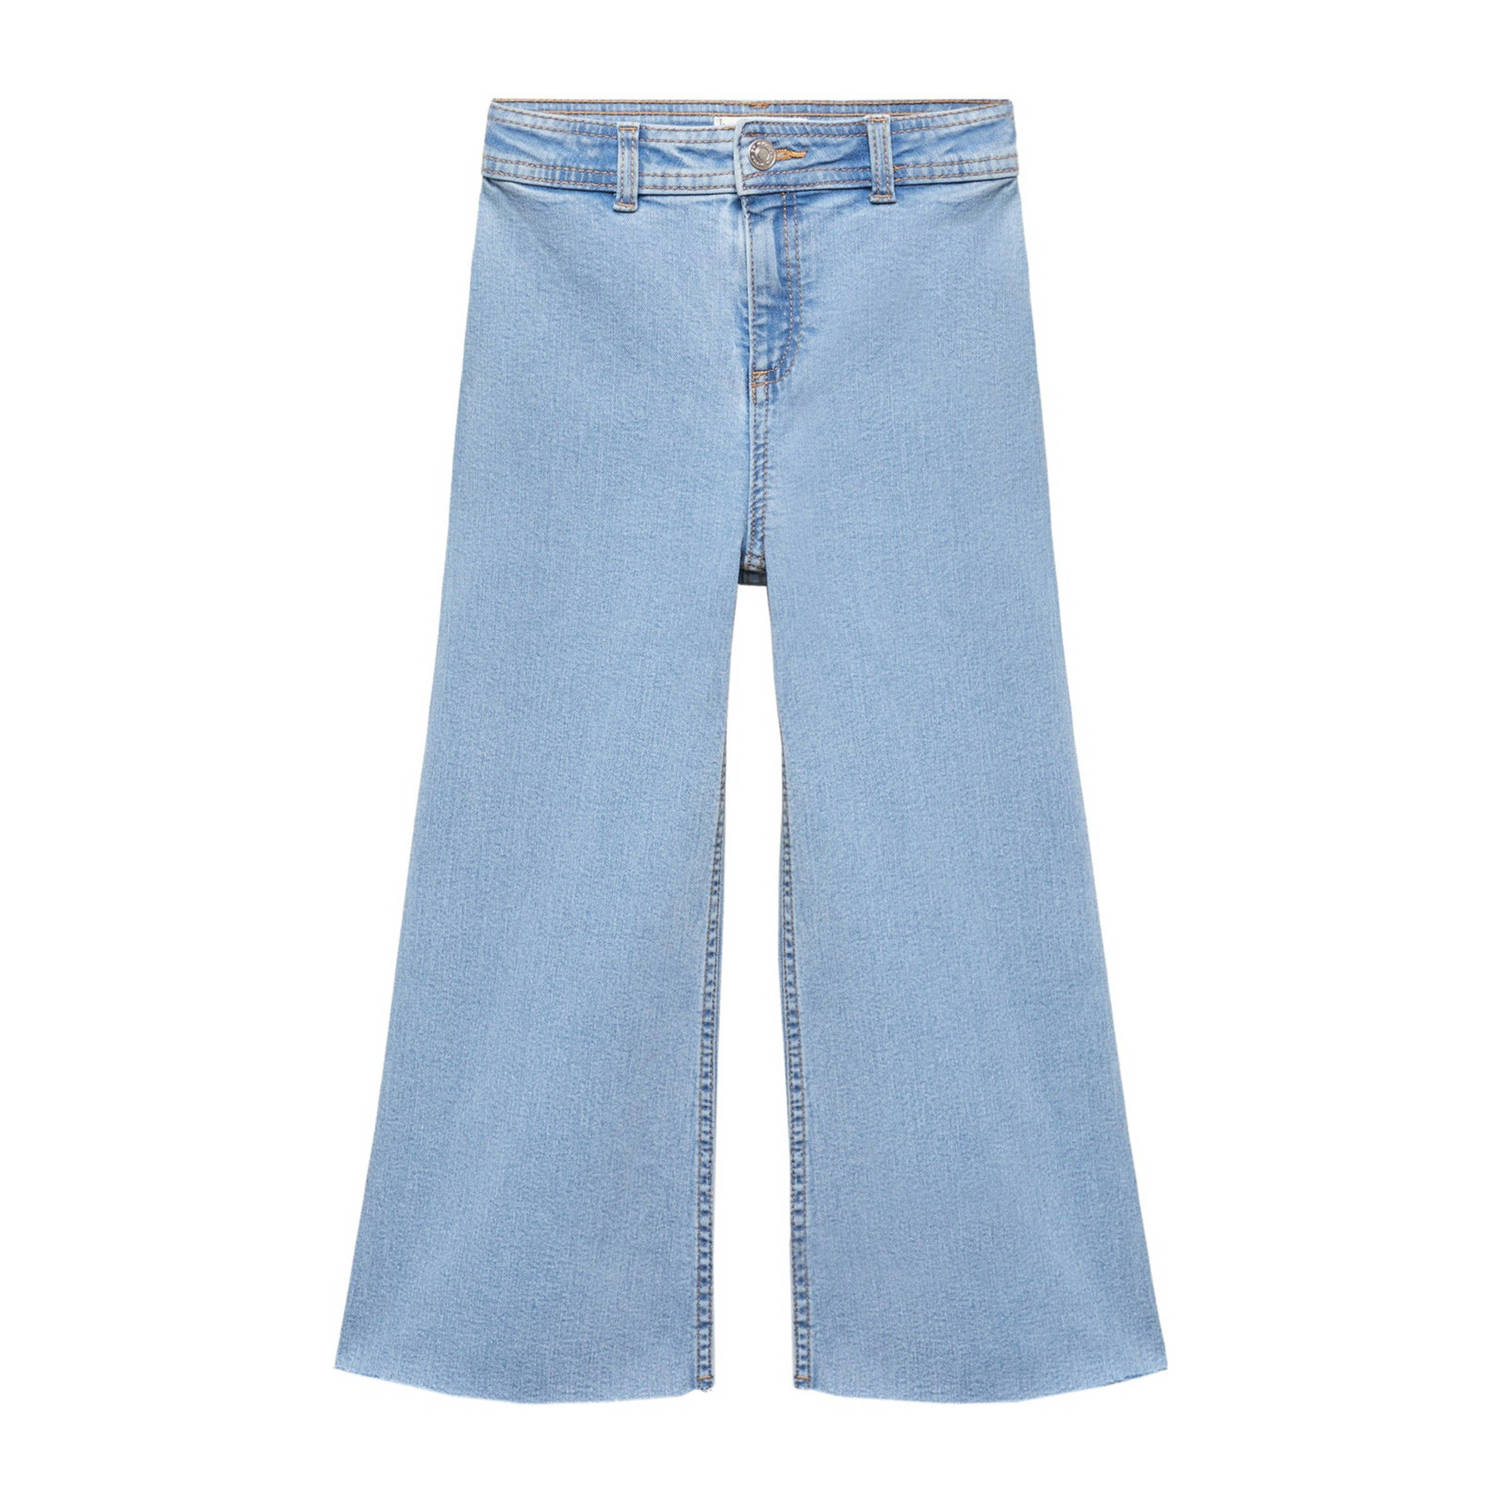 Mango Kids wide leg jeans changeant blauw Meisjes Stretchdenim Effen 122